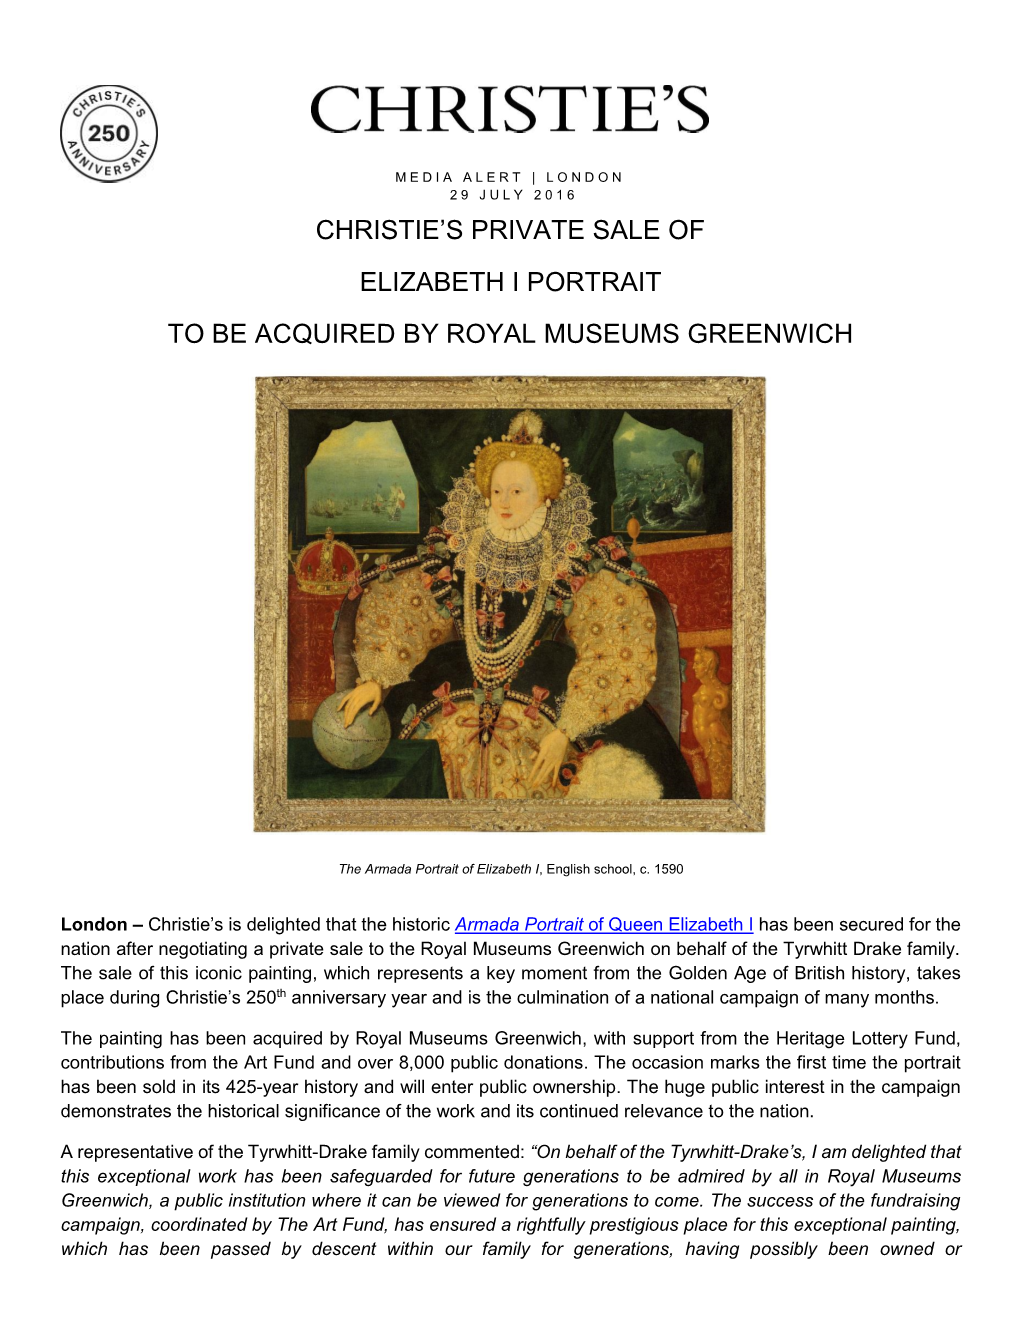 Christie's Private Sale of Elizabeth I Portrait to Be